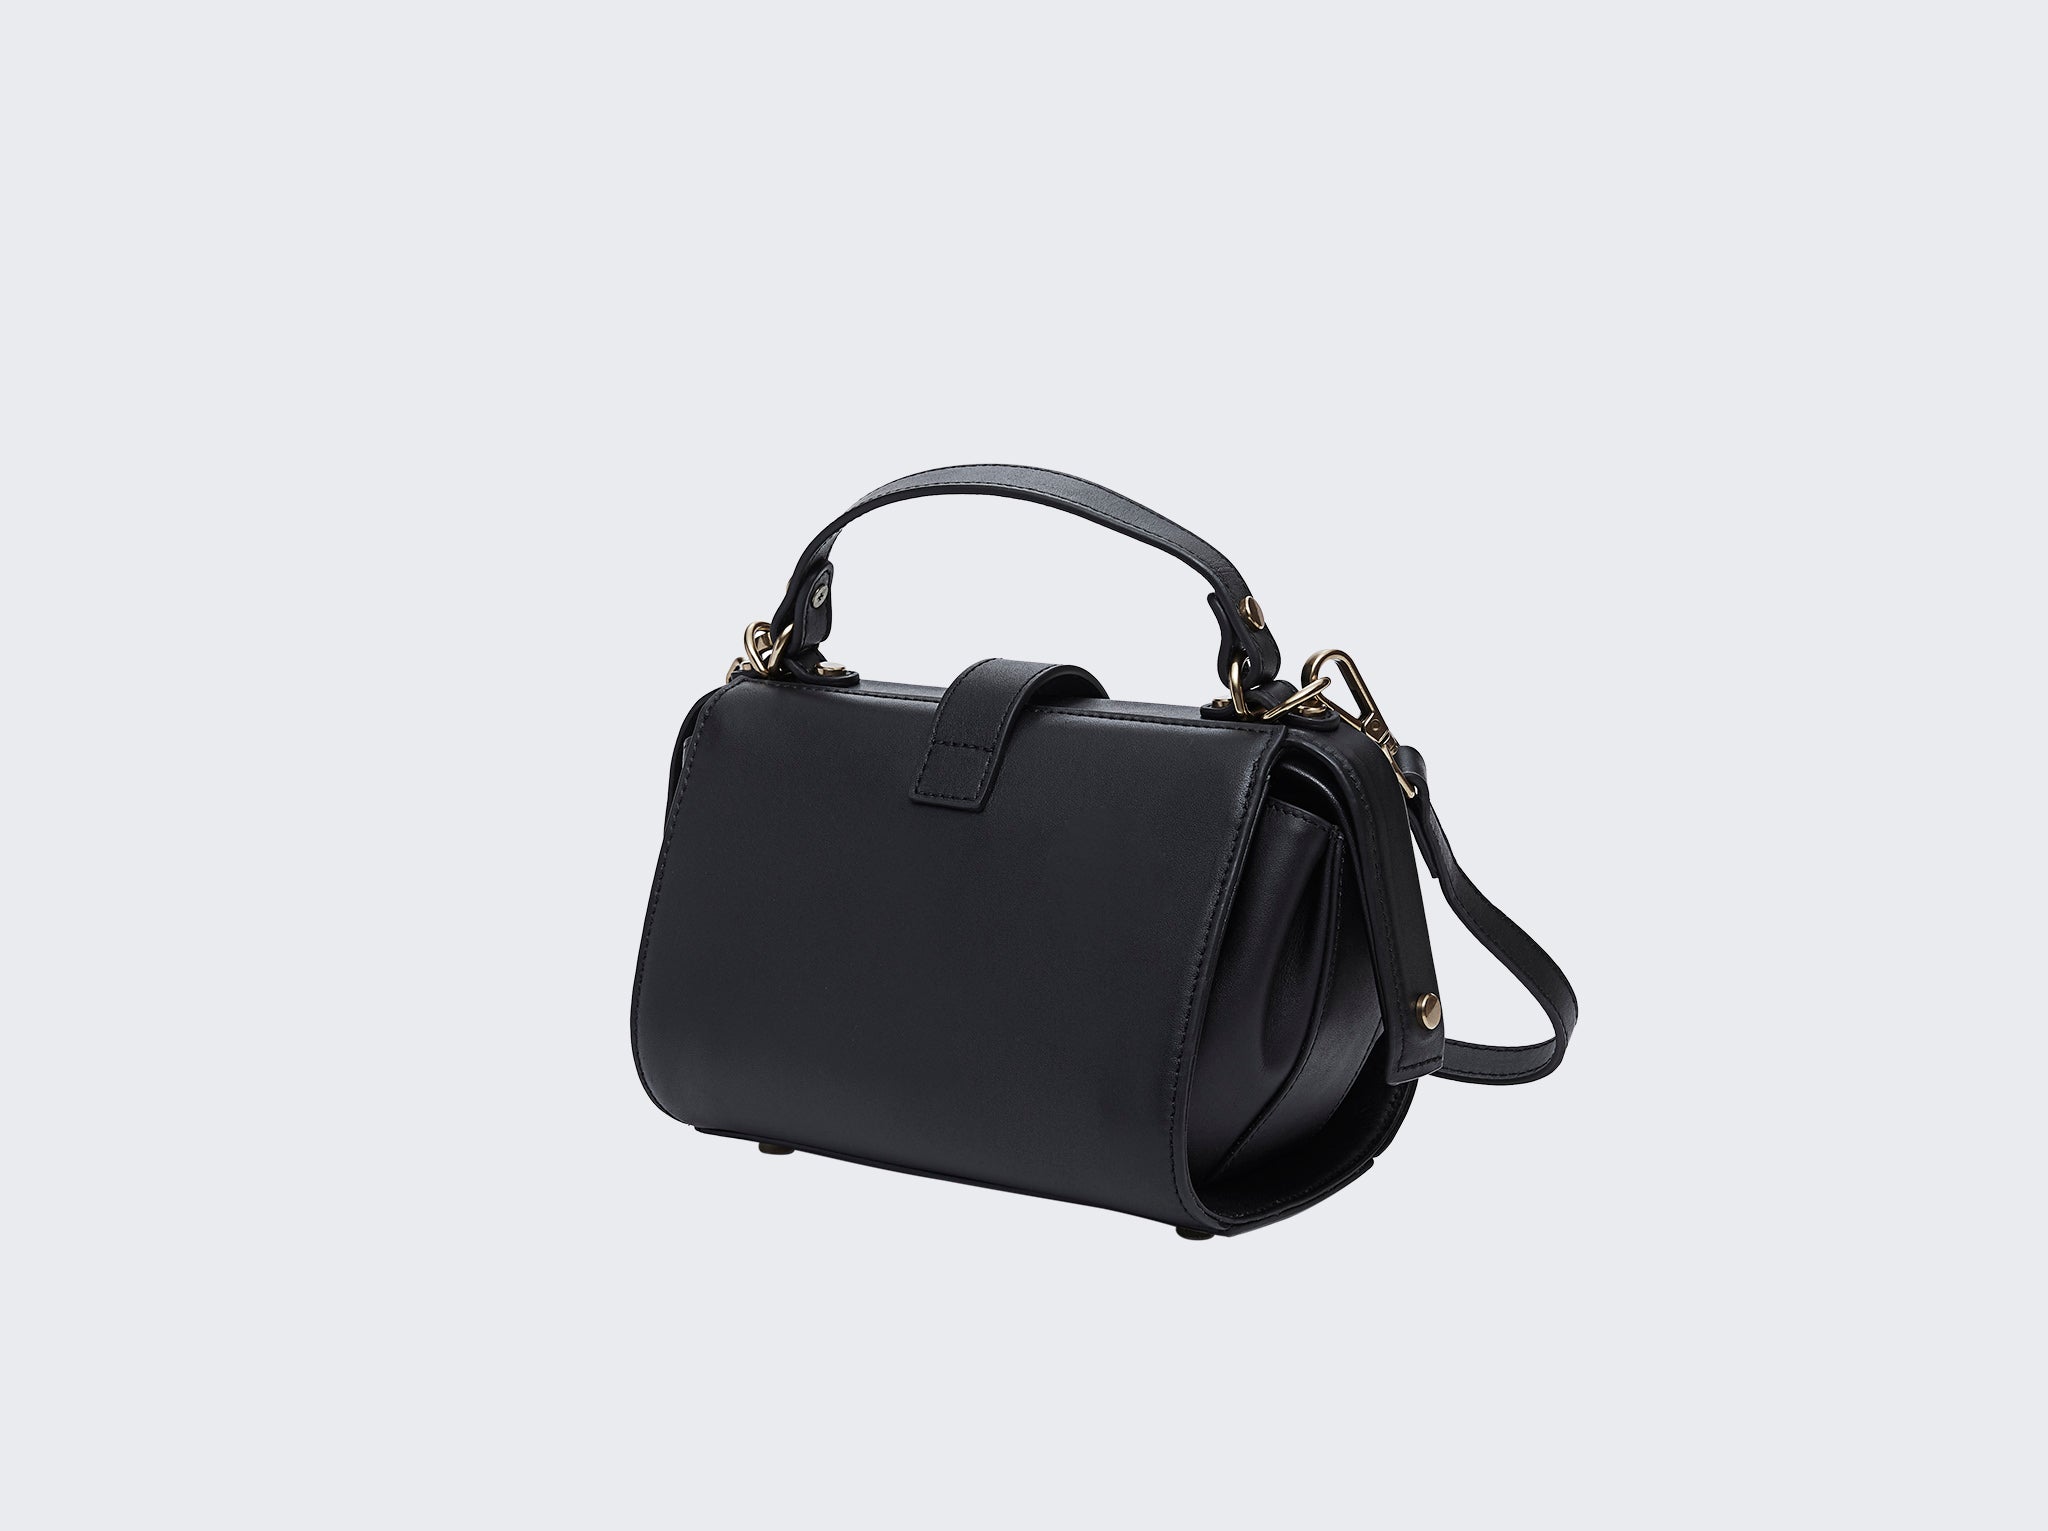 The Eloise Noir Clasped Bag